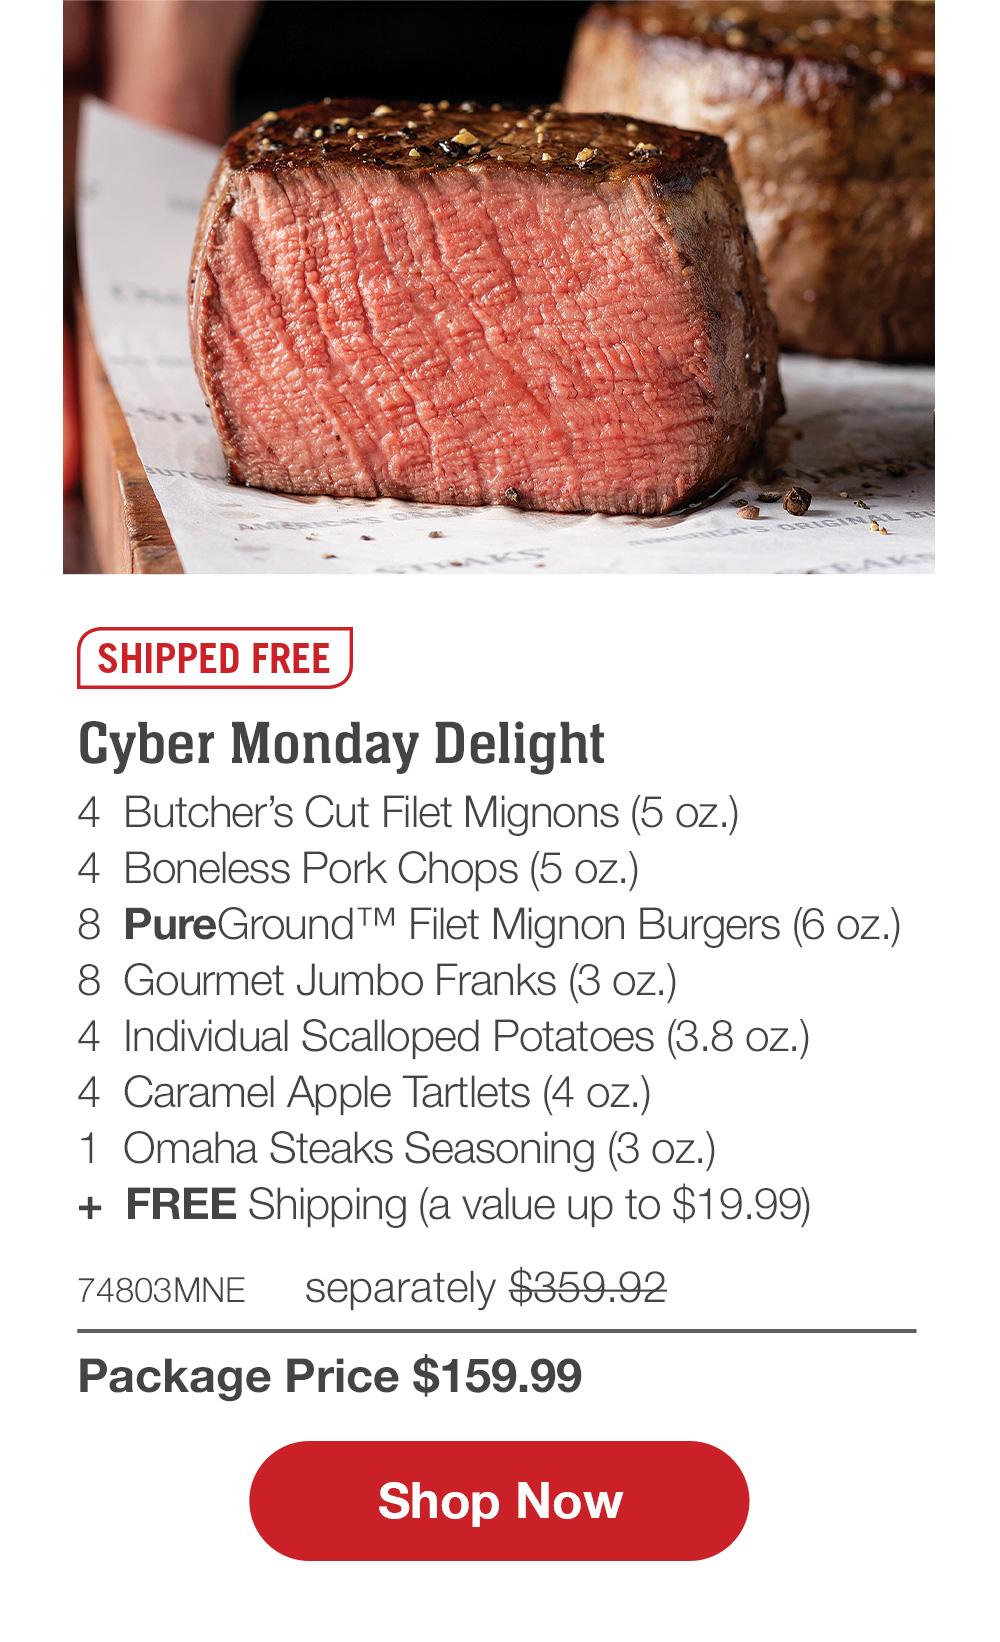 SHIPPED FREE | Black Friday Delight - 4  Butcher's Cut Filet Mignons (5 oz.) - 4  Boneless Pork Chops (5 oz.) - 8  PureGround™ Filet Mignon Burgers (6 oz.) - 8  Gourmet Jumbo Franks (3 oz.) - 4  Individual Scalloped Potatoes (3.8 oz.) - 4  Caramel Apple Tartlets (4 oz.) - 1  Omaha Steaks Seasoning (3 oz.) - 74790MNE separately $359.92 | Package Price $159.99 || SHOP NOW